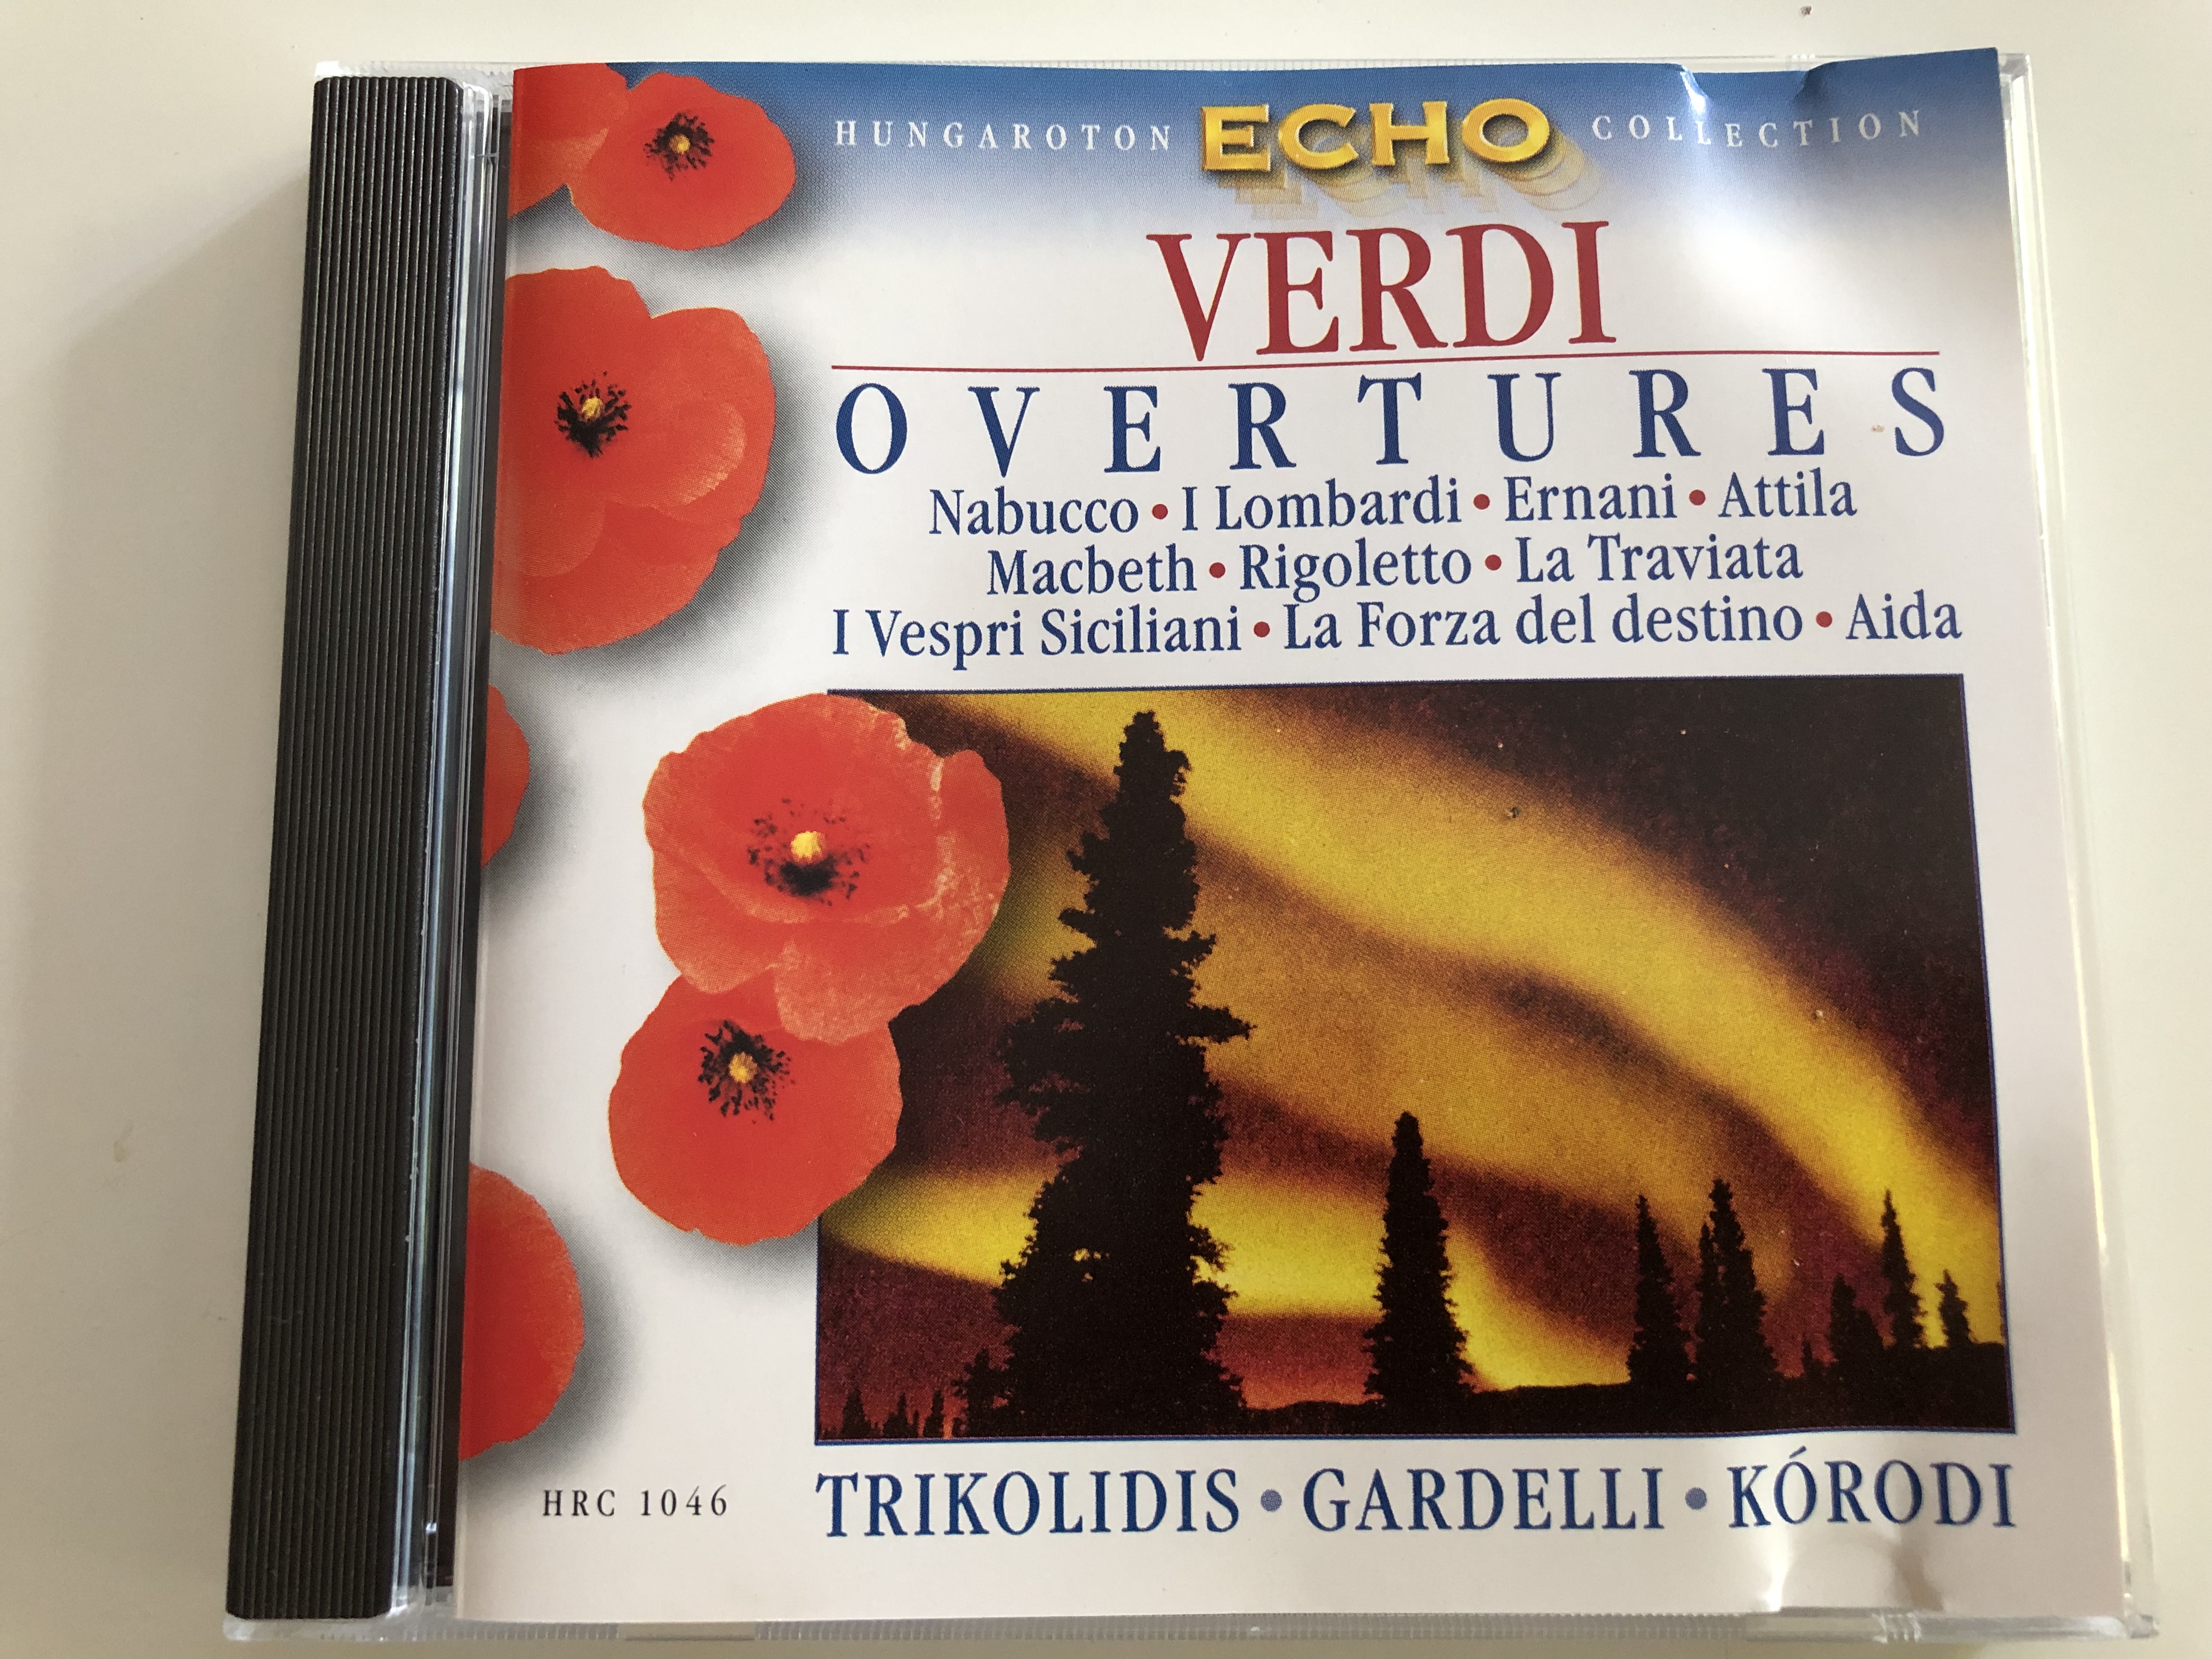 -verdi-overtures-nabucco-i-lombardi-ernani-attila-macbeth-rigoletto-la-traviata-aida-trikolidis-gardelli-k-rodi-hungaroton-echo-collection-audio-cd-1999-hrc-1046-1-.jpg